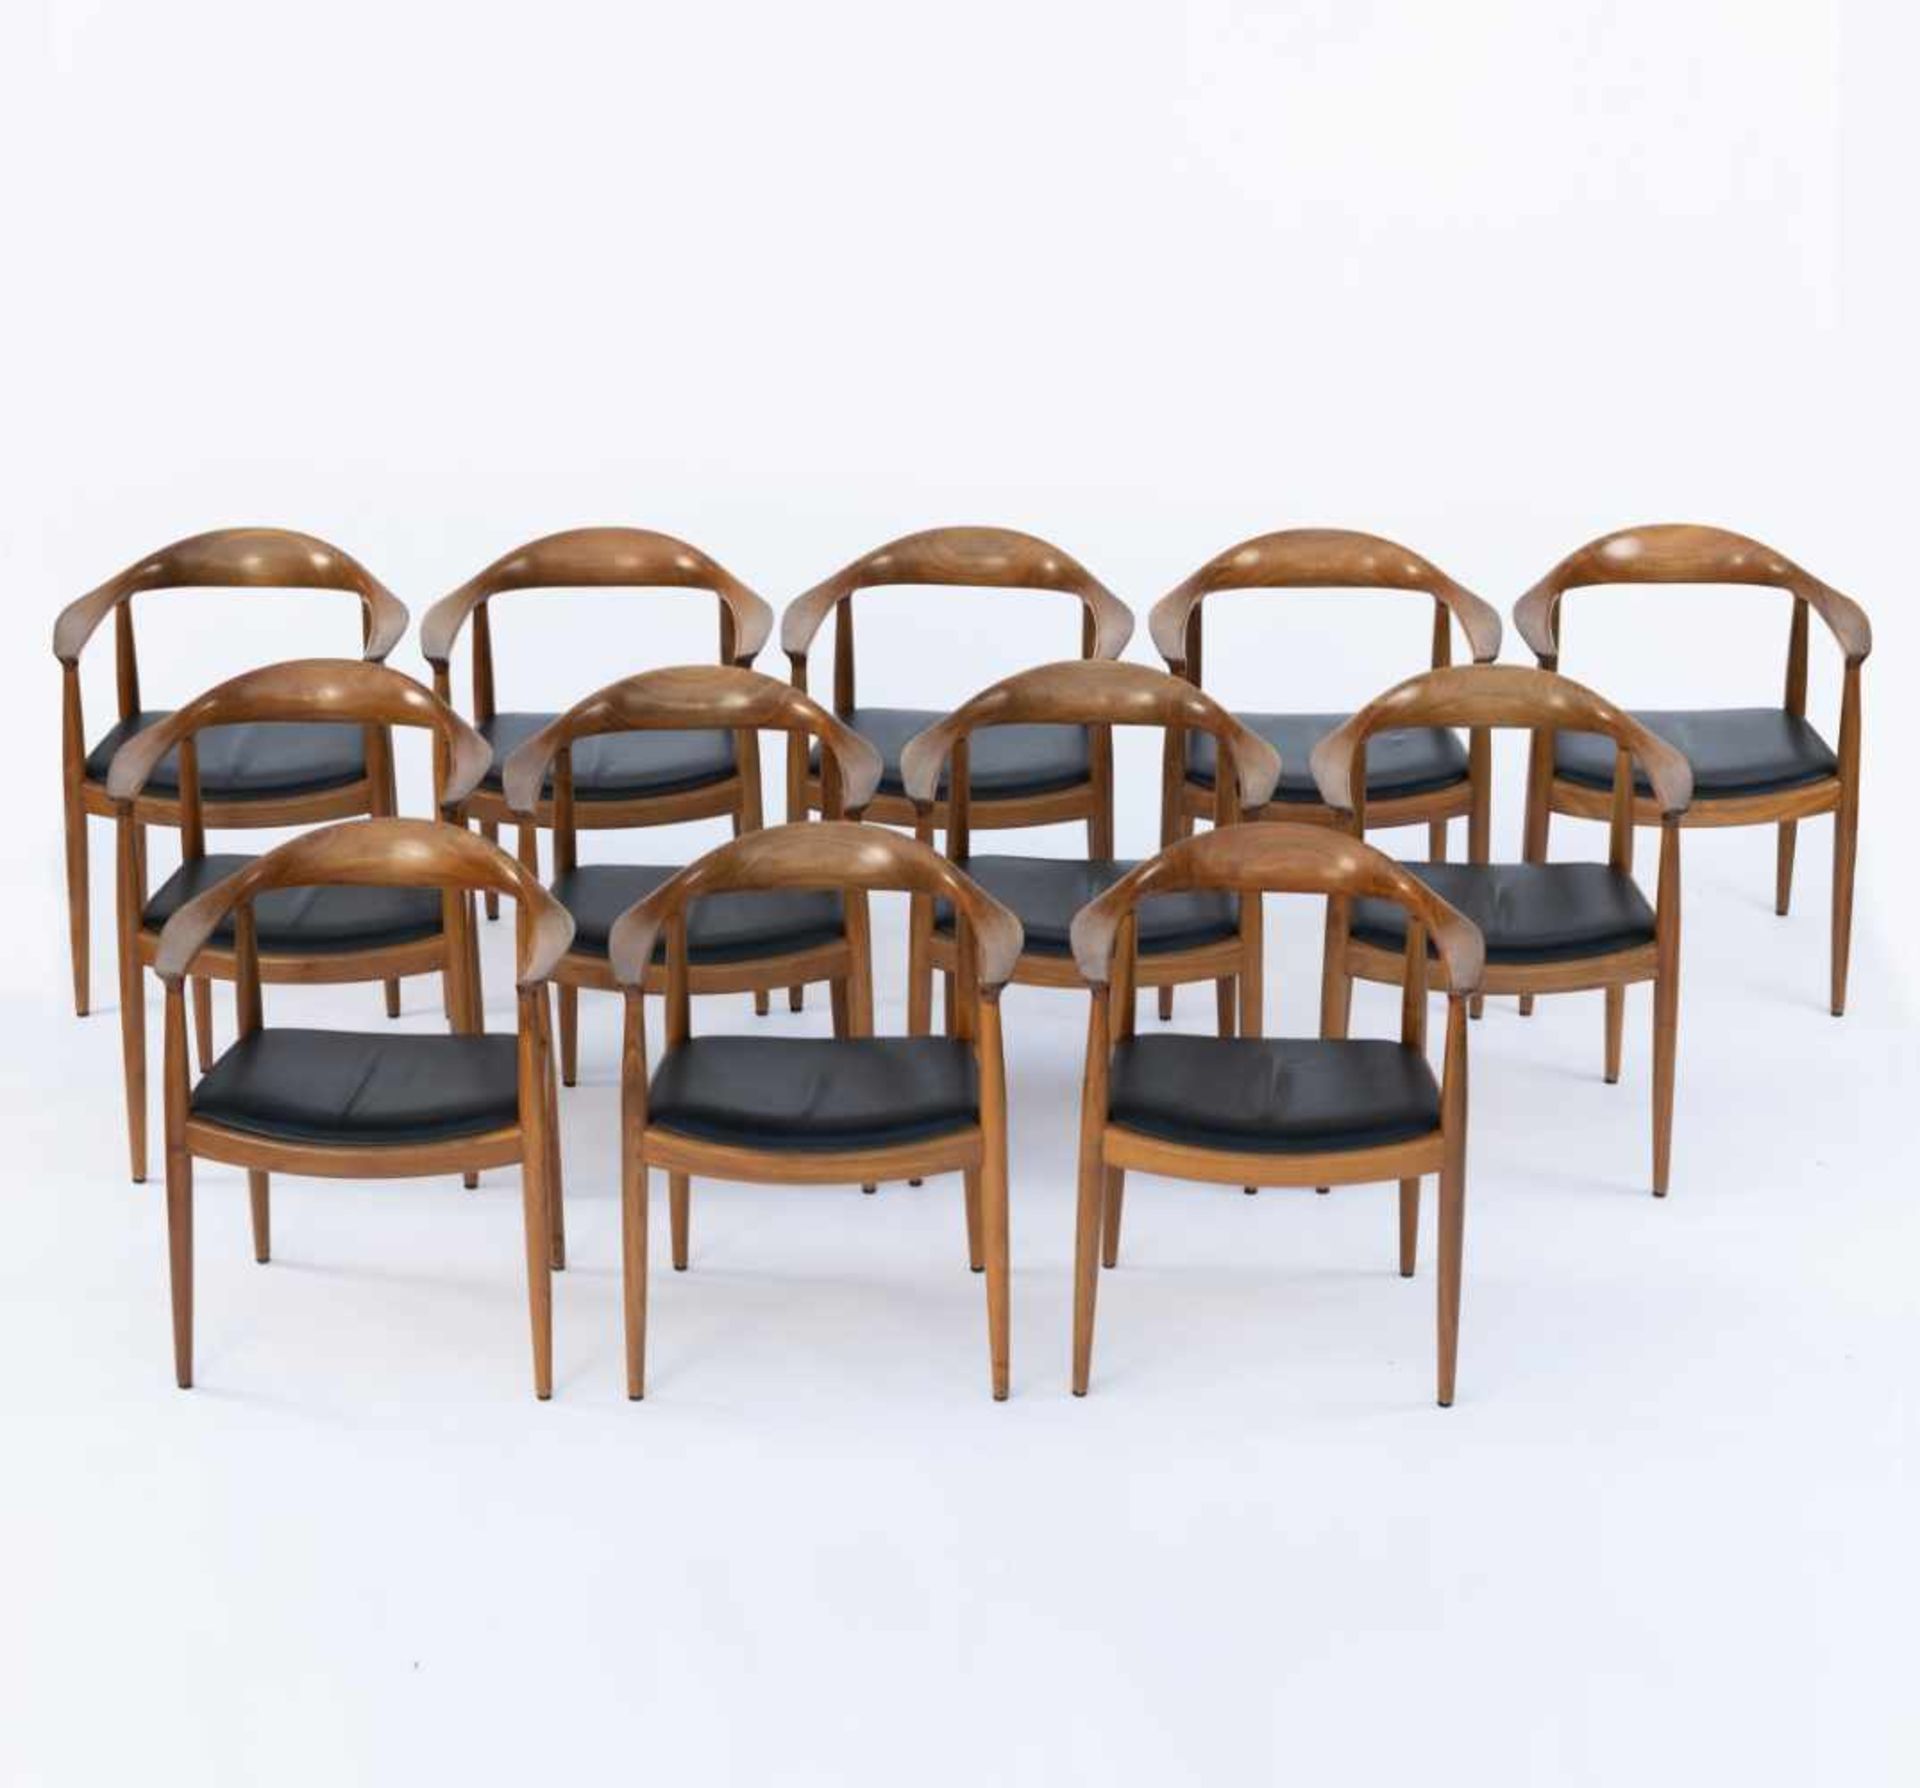 Hans J. Wegner, Zwölf Armlehnstühle 'The Chair' - 'PP 503', 1949Zwölf Armlehnstühle 'The Chair' - '